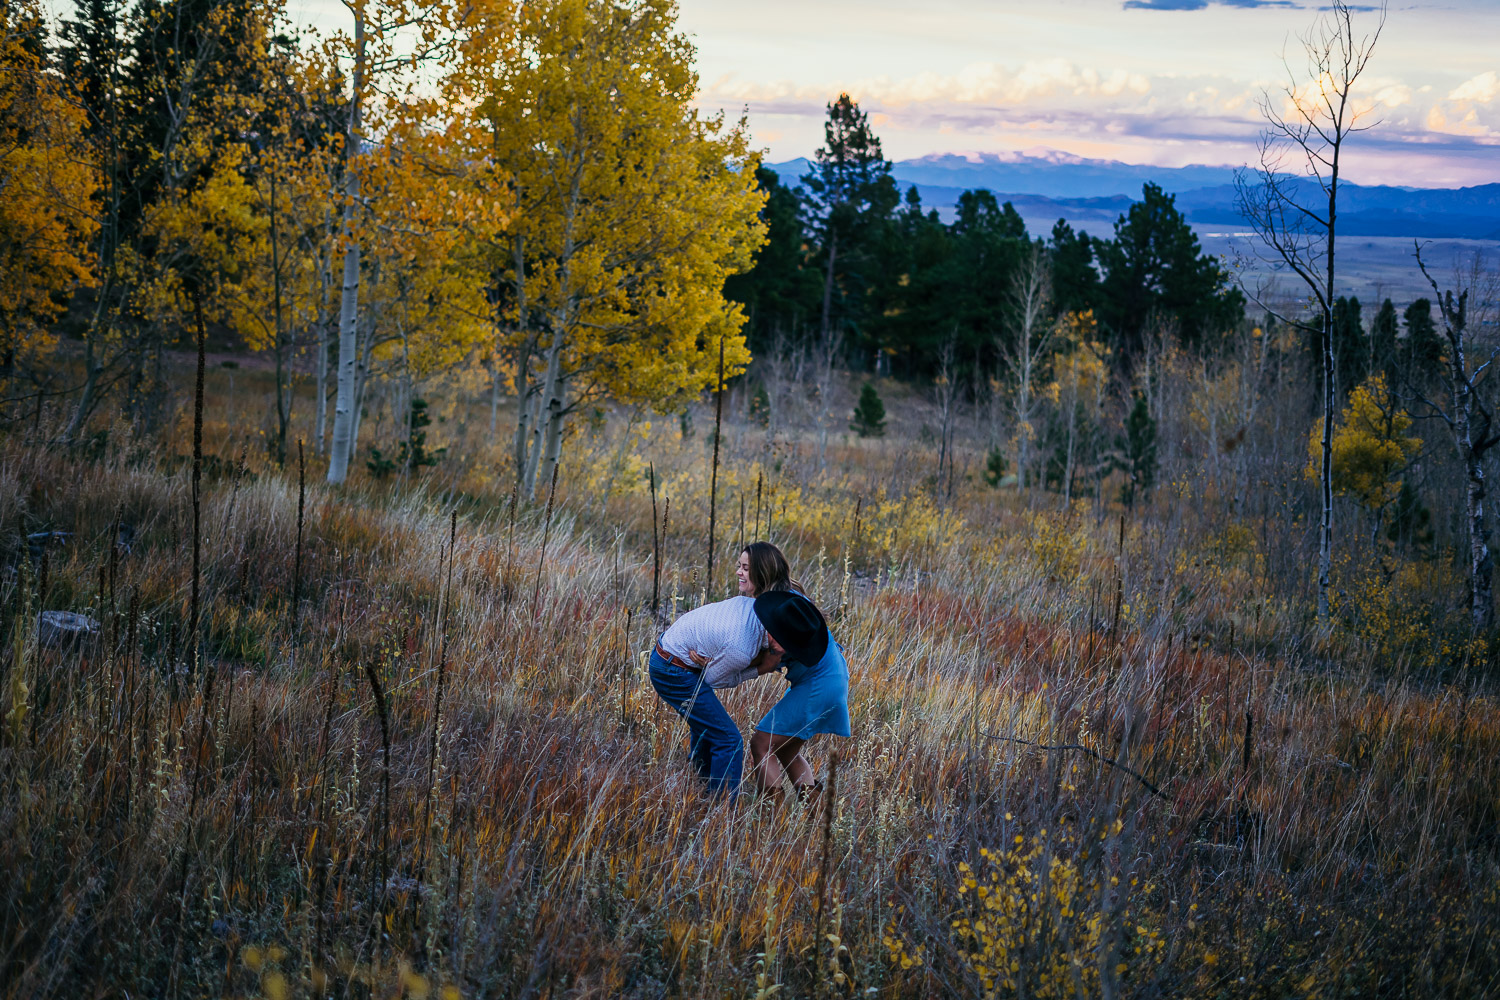 Fall Adventure Session, Alvarado Campground, Westcliff Colorado, Hillside Colorado, Autumn, Colorado Engagement Photography, Colorado Couples Photographer, Elopement